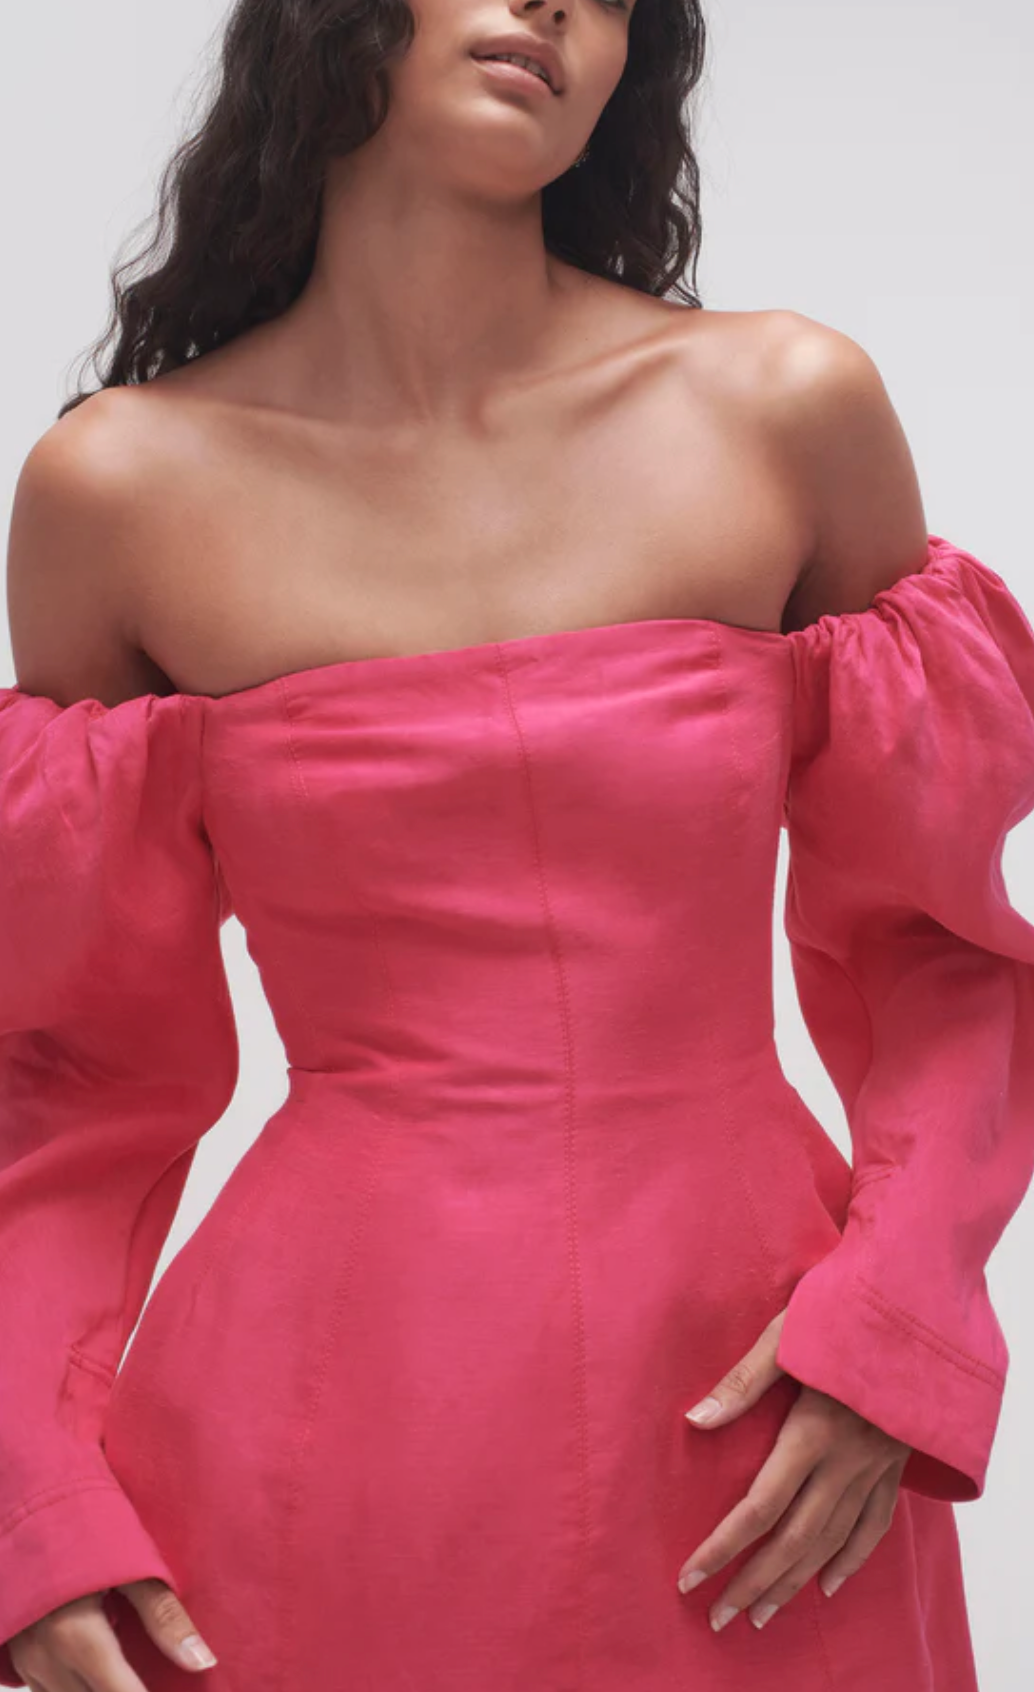 Baret Strapless Mini Dress, Hot Pink